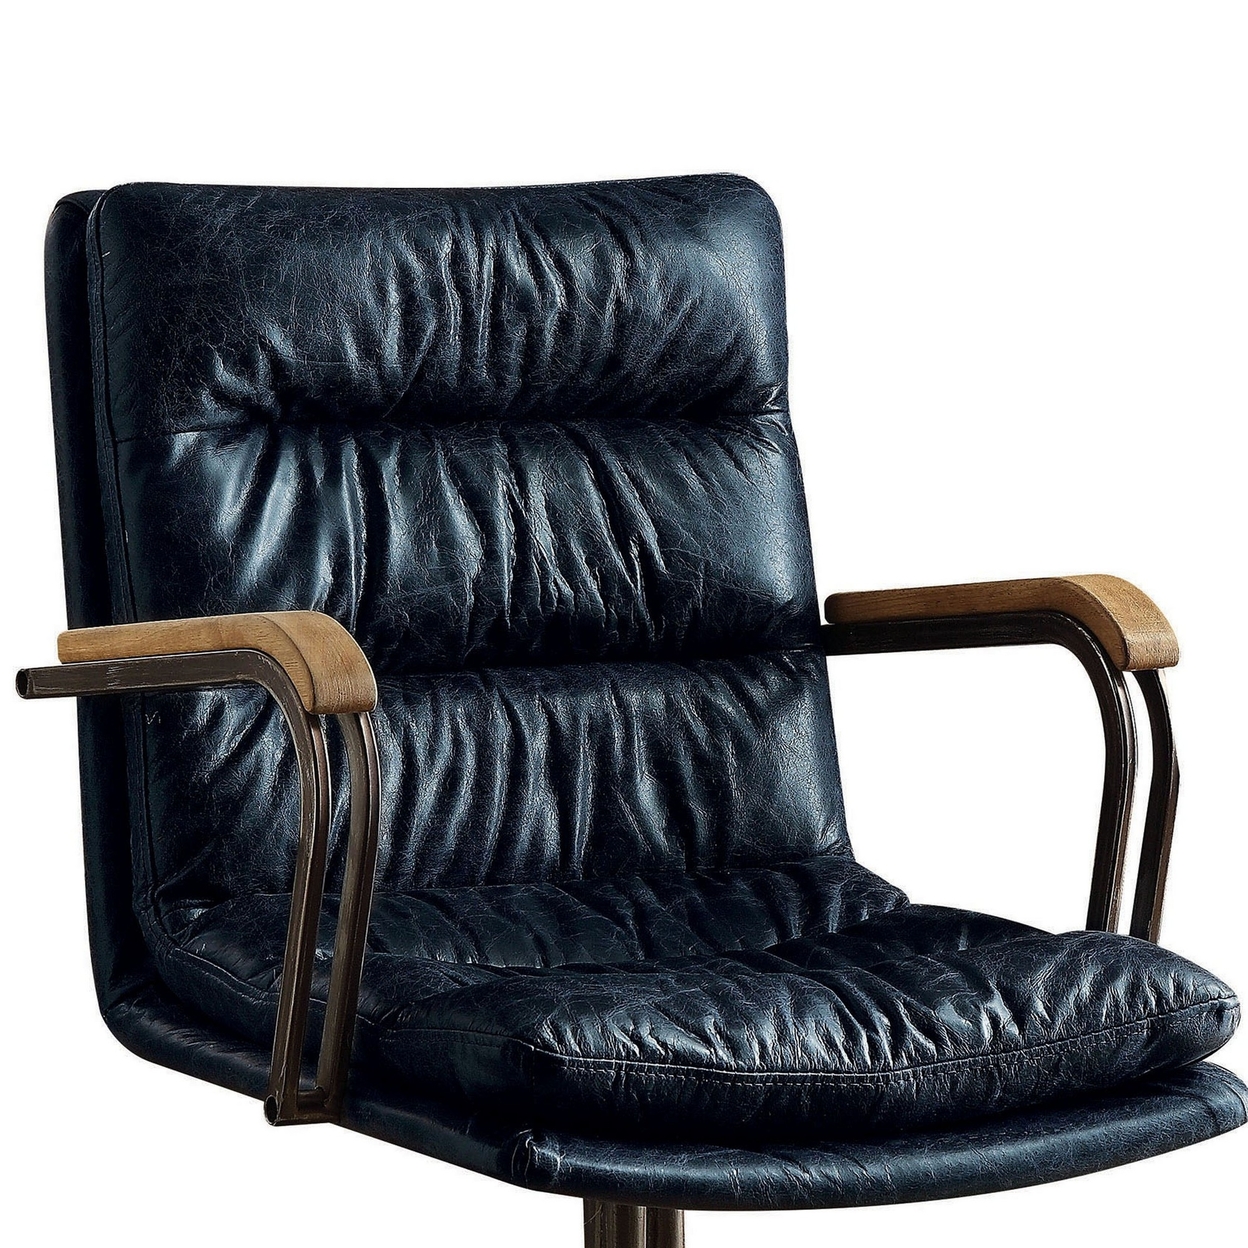 Metal & Leather Executive Office Chair, Vintage Blue- Saltoro Sherpi